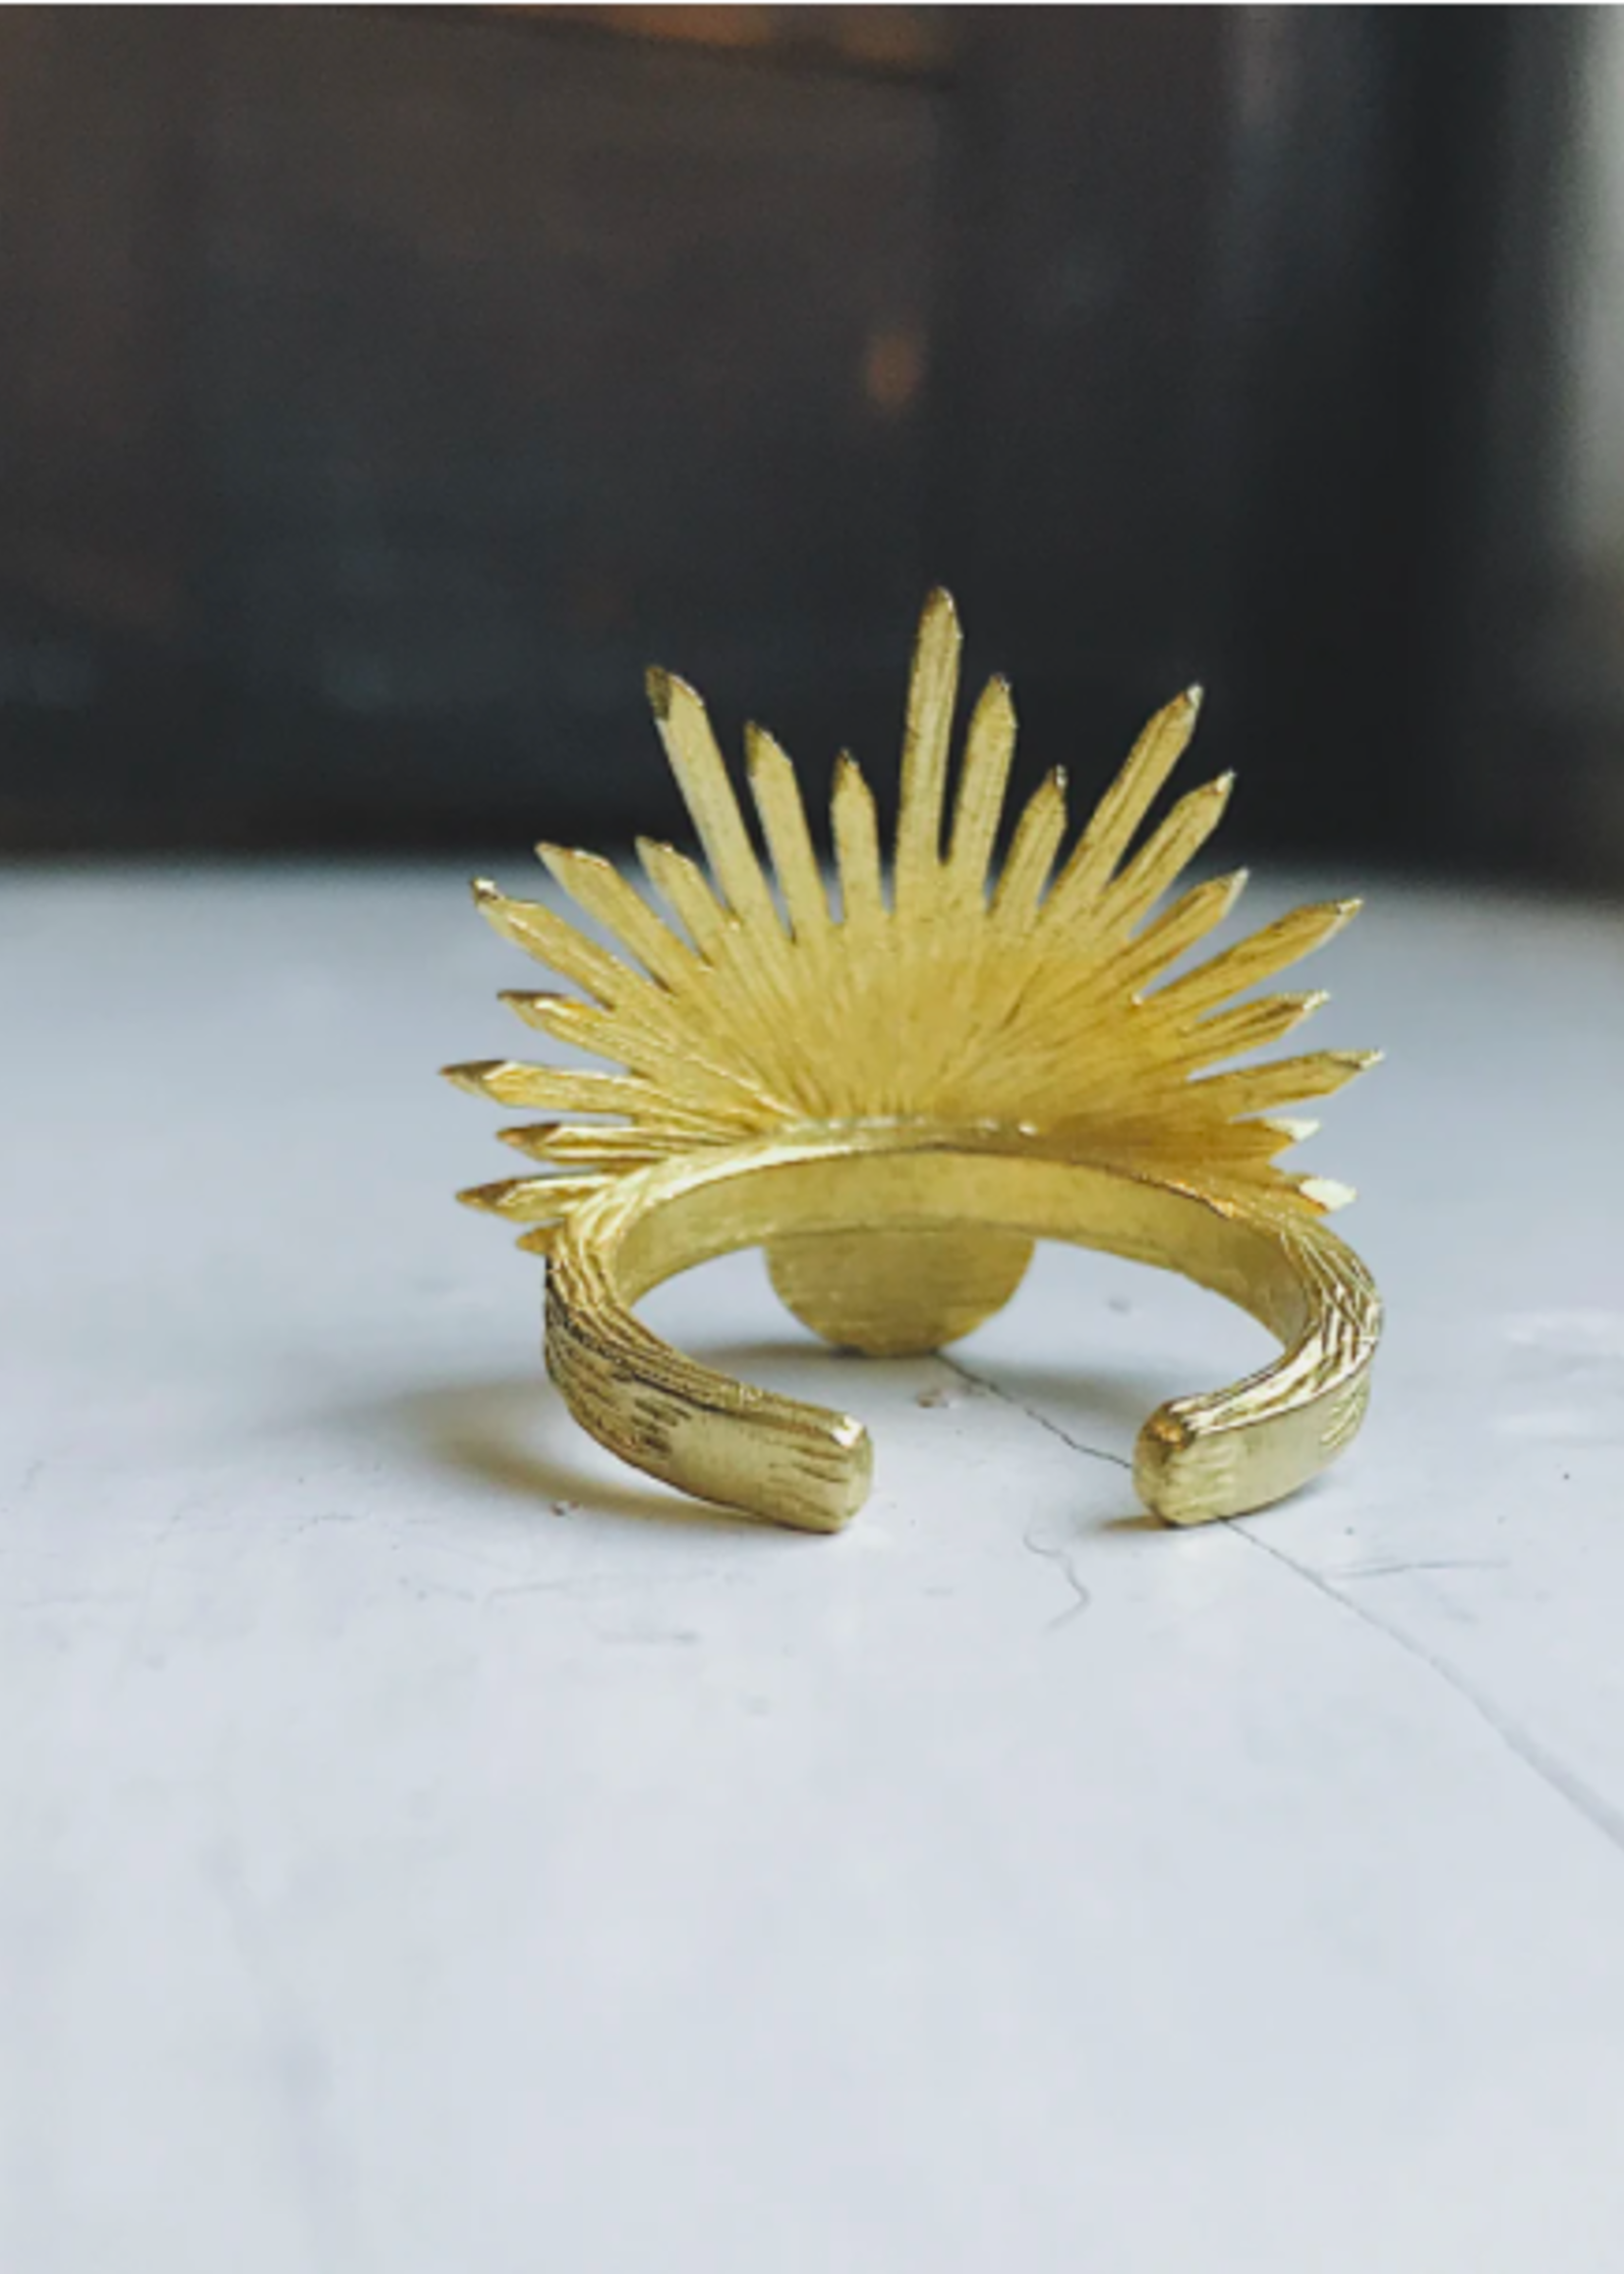 *Sun Goddess Ring - Gold Tone Sunburst Ring with Turquoise